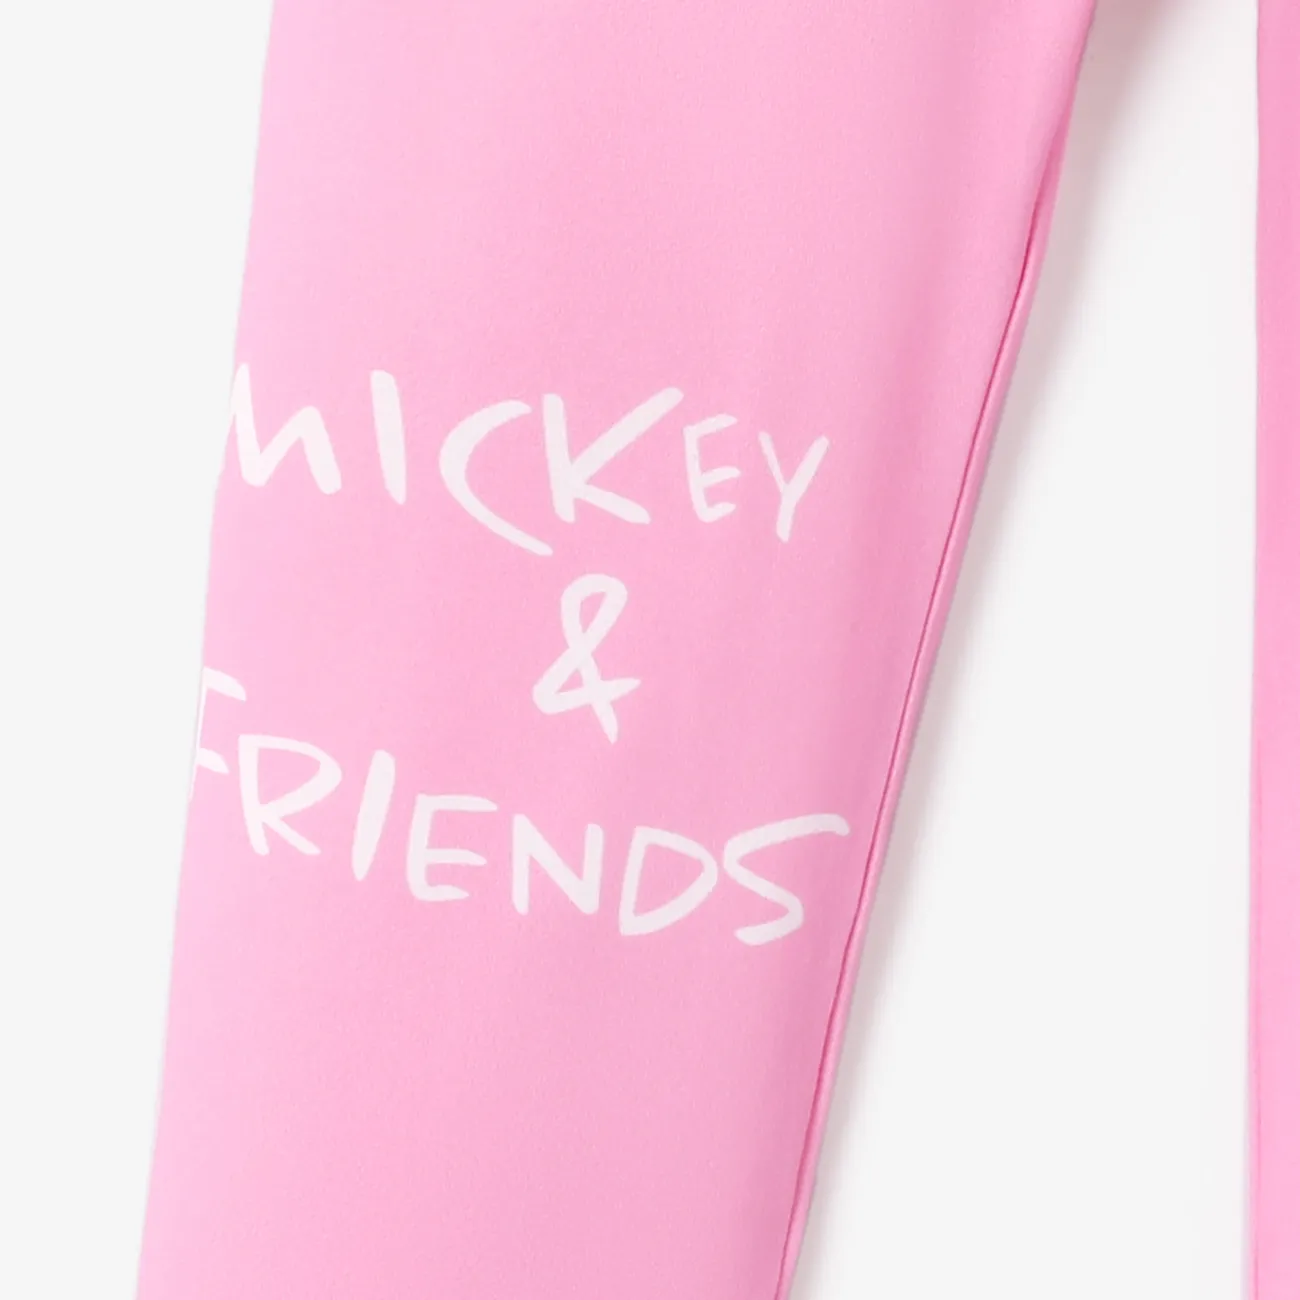 Disney Mickey and Friends Toddler Girl Character Print Leggings Pink big image 1